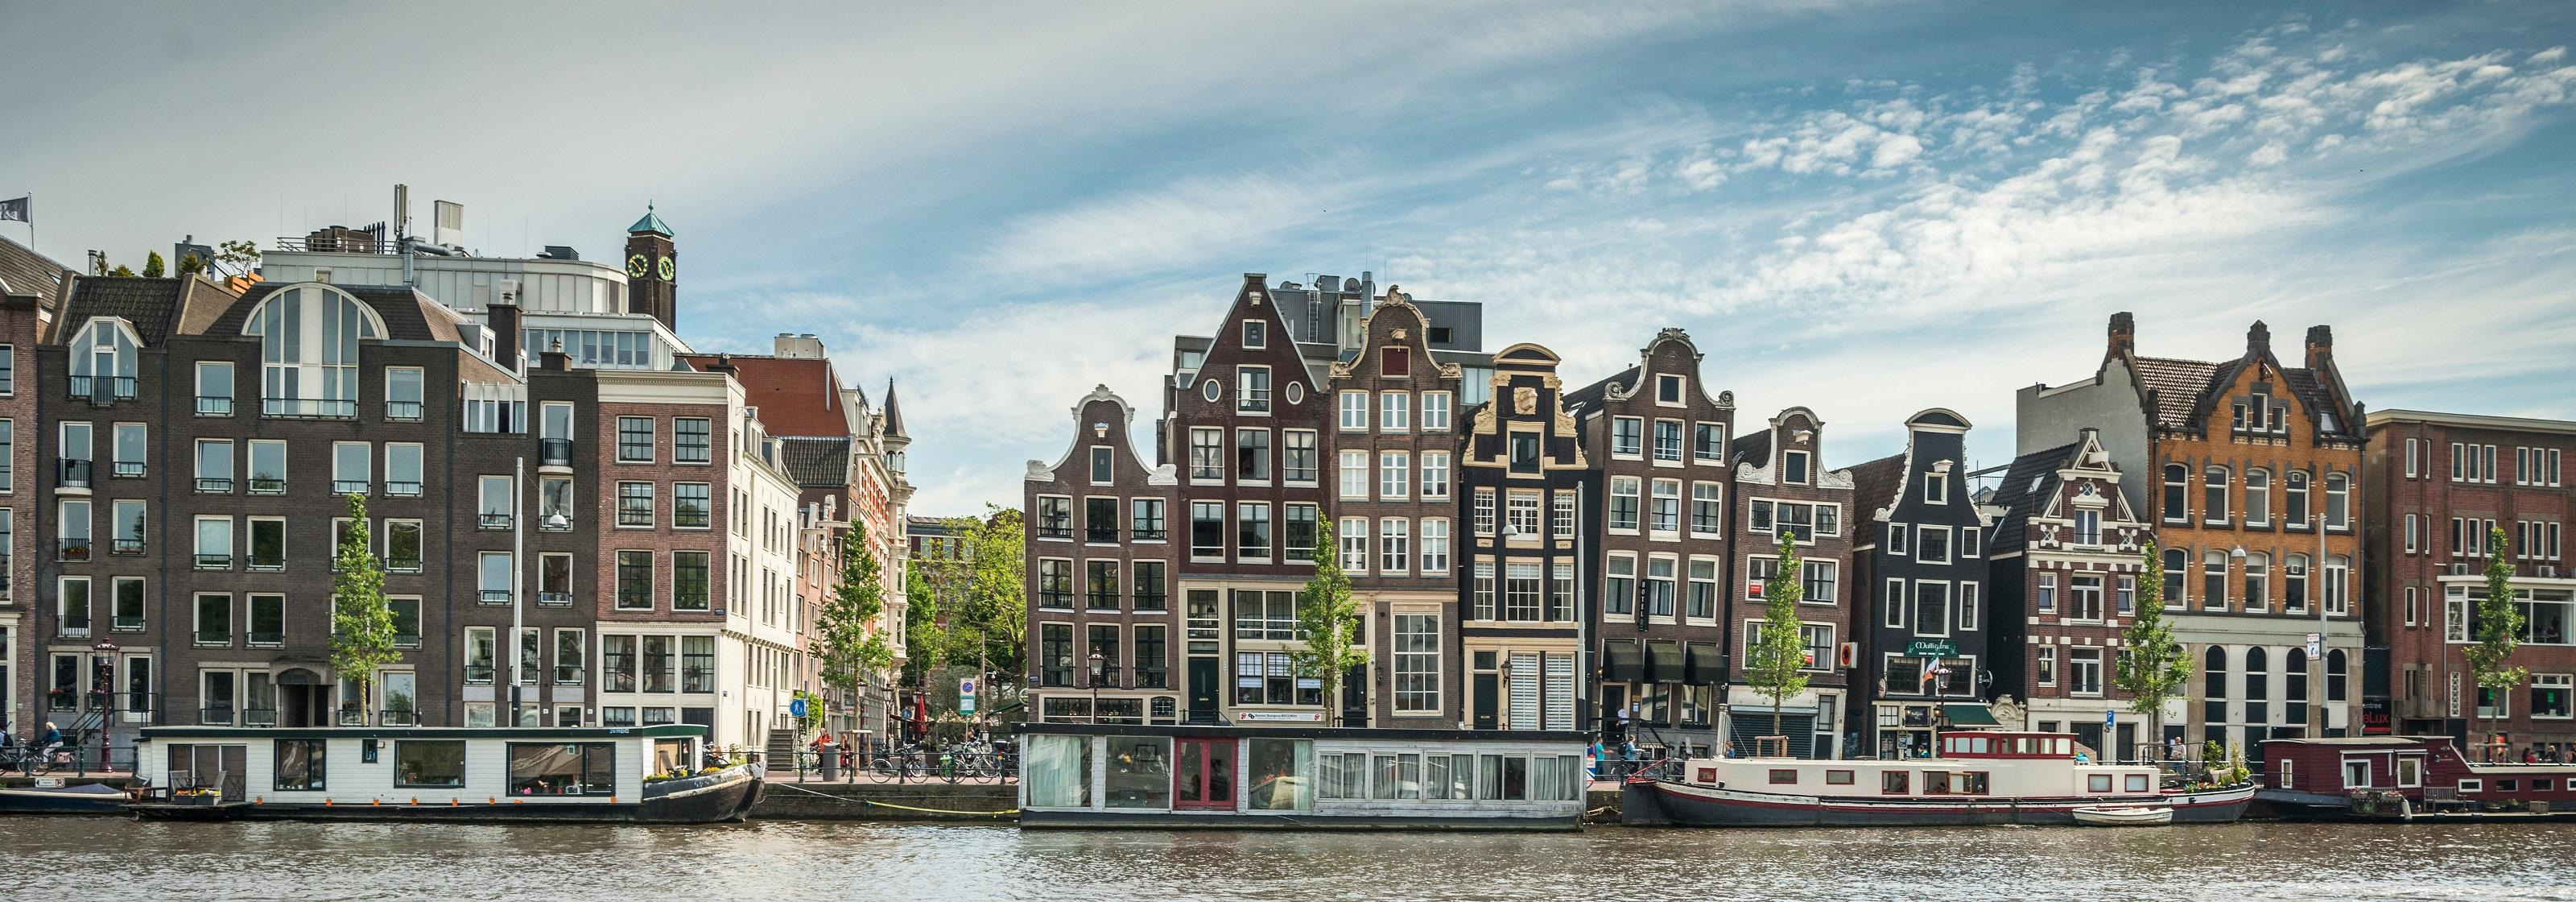 AmsterdamSquare 橫幅